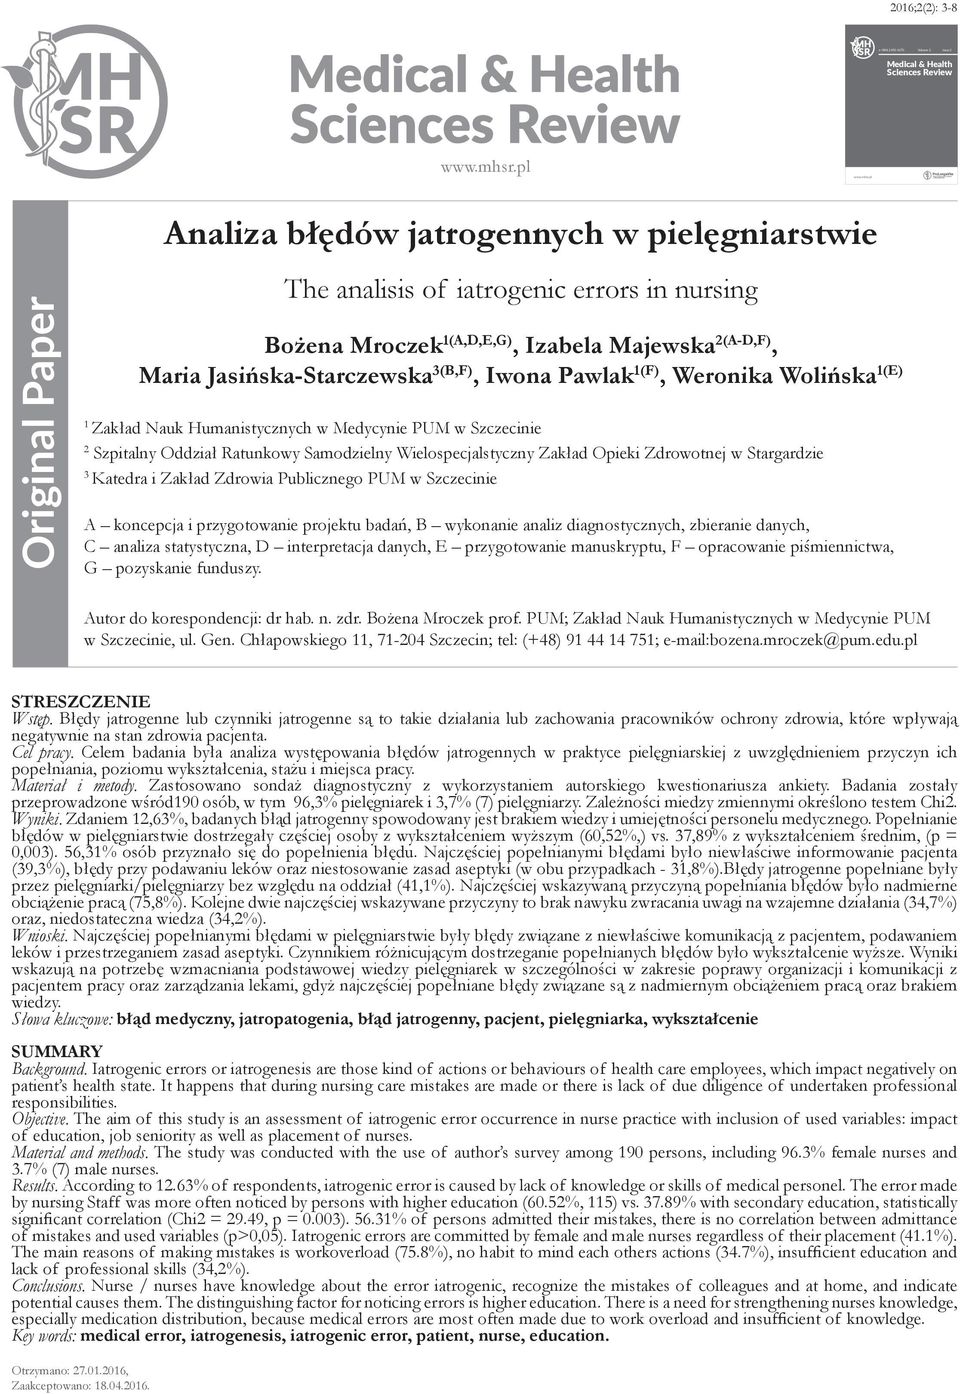 pl Original Paper The analisis of iatrogenic errors in nursing Bożena Mroczek 1(A,D,E,G), Izabela Majewska 2(A-D,F), Maria Jasińska-Starczewska 3(B,F), Iwona Pawlak 1(F), Weronika Wolińska 1(E) 1